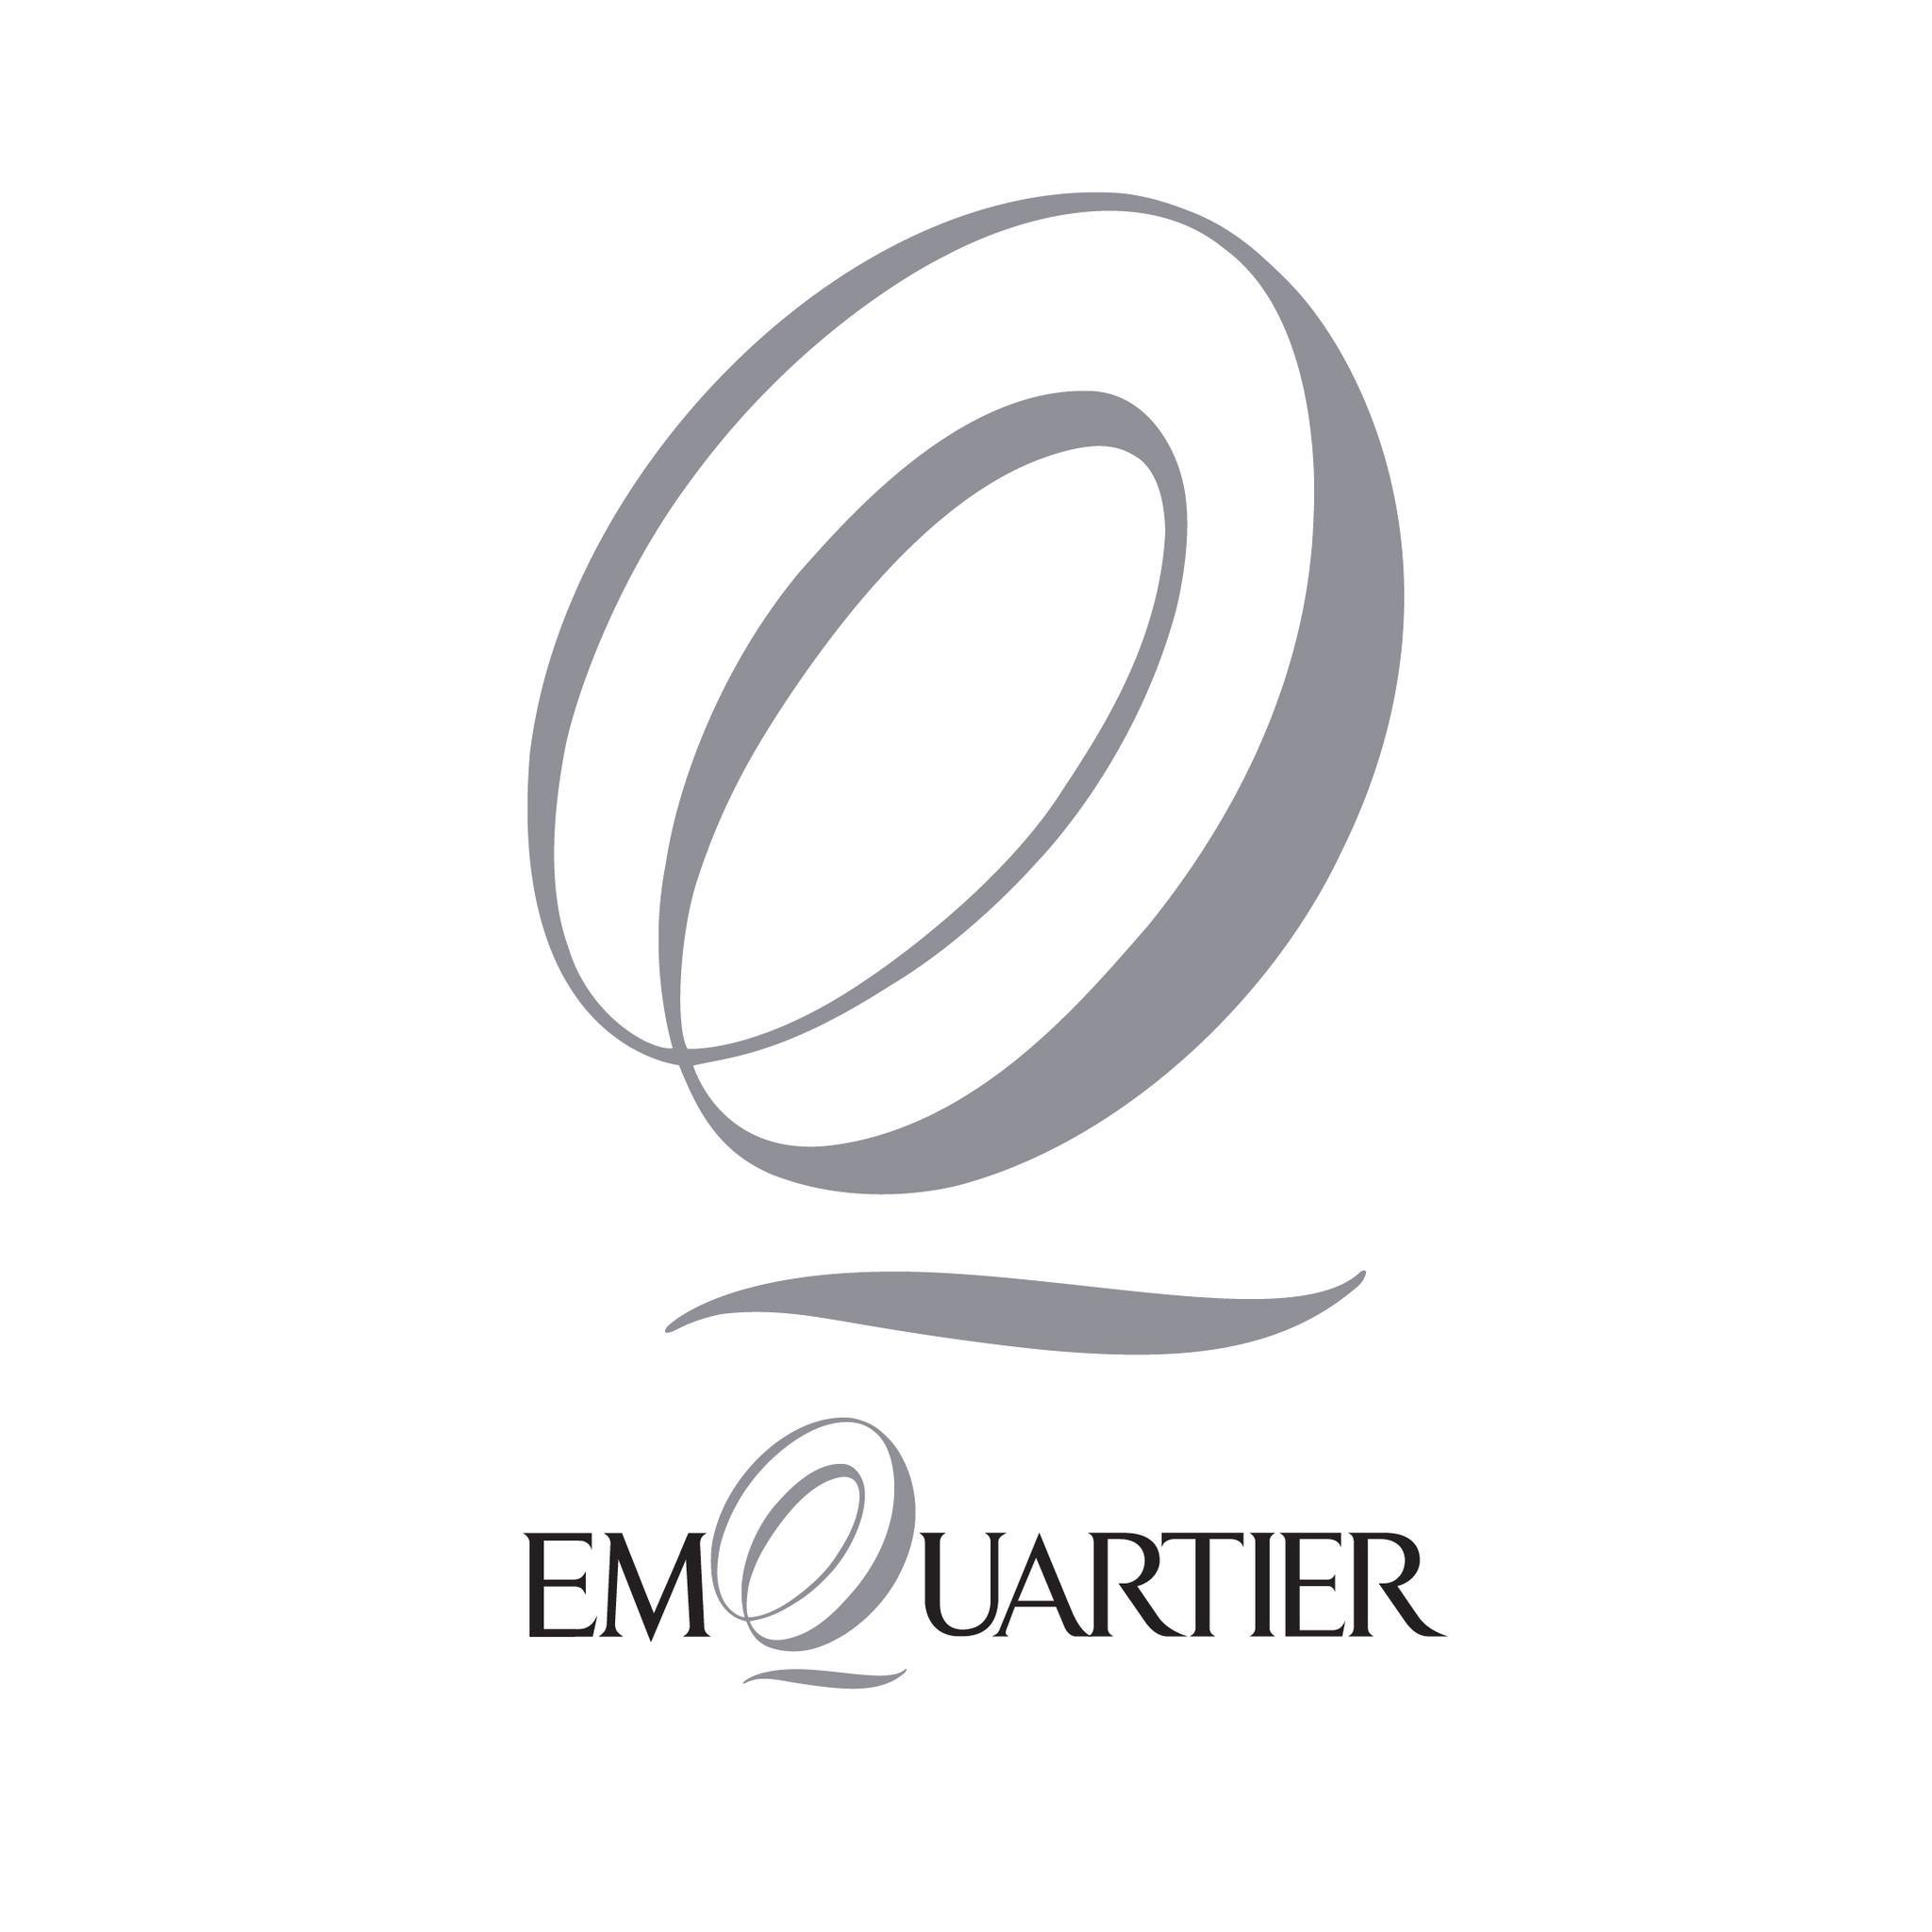 The EmQuartier